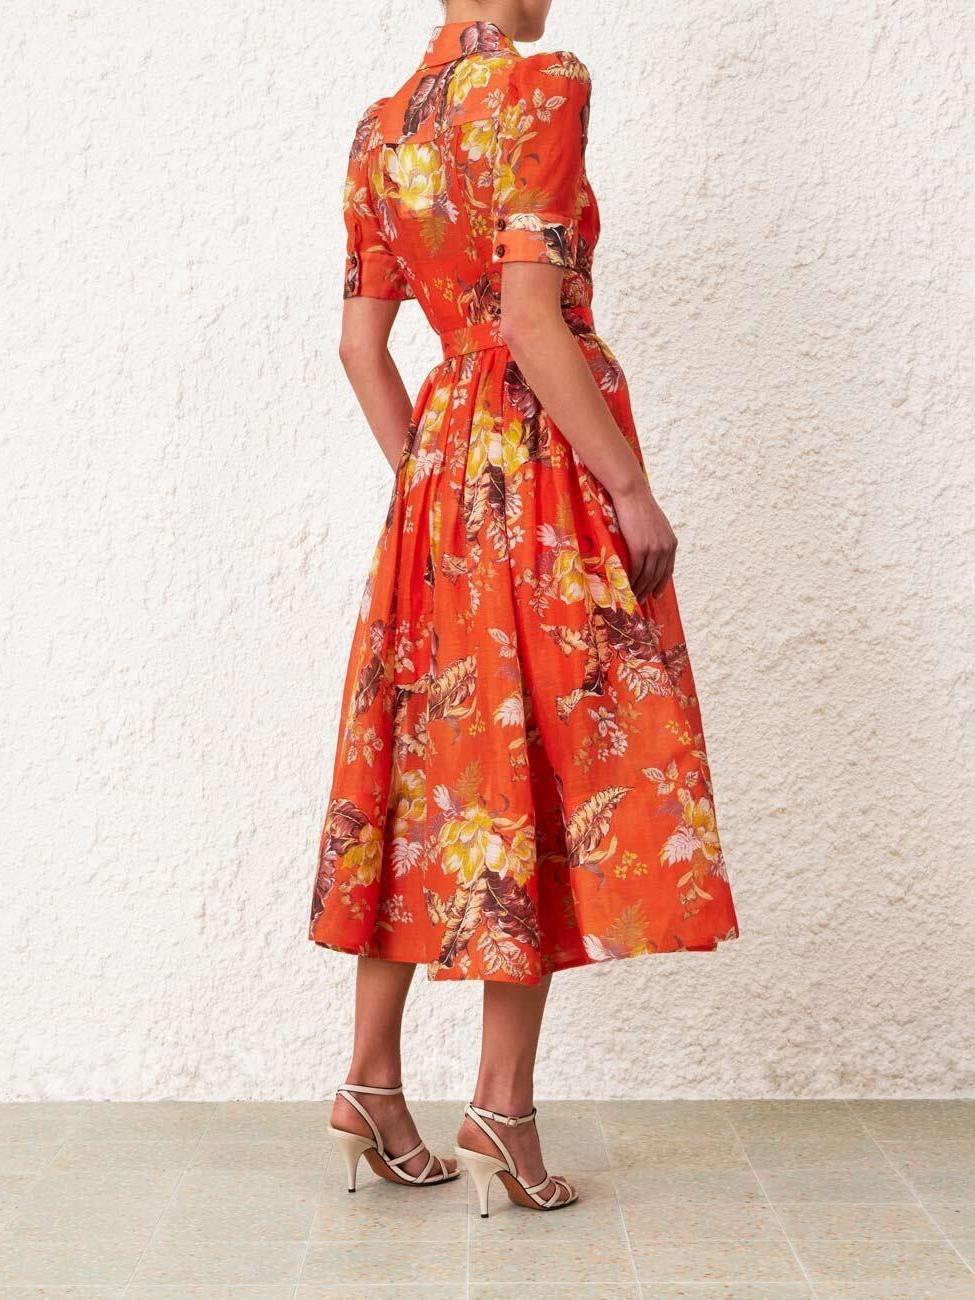 Tropical floral print resort dress